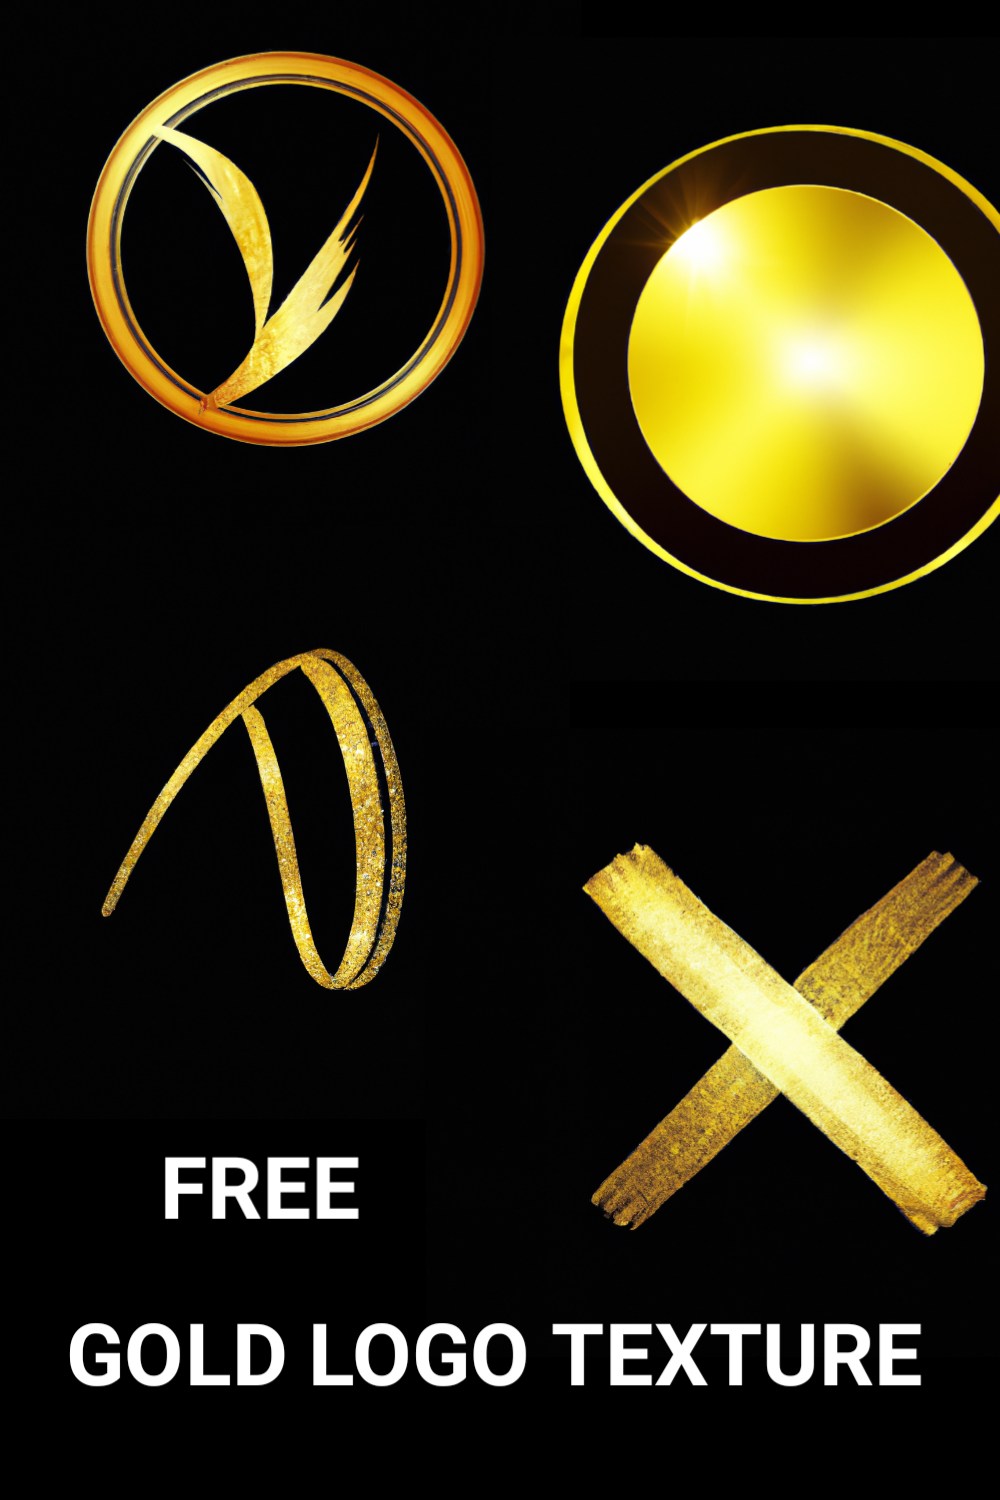 Free Gold Texture for Logo | Gold Logo Texture Bundles pinterest preview image.